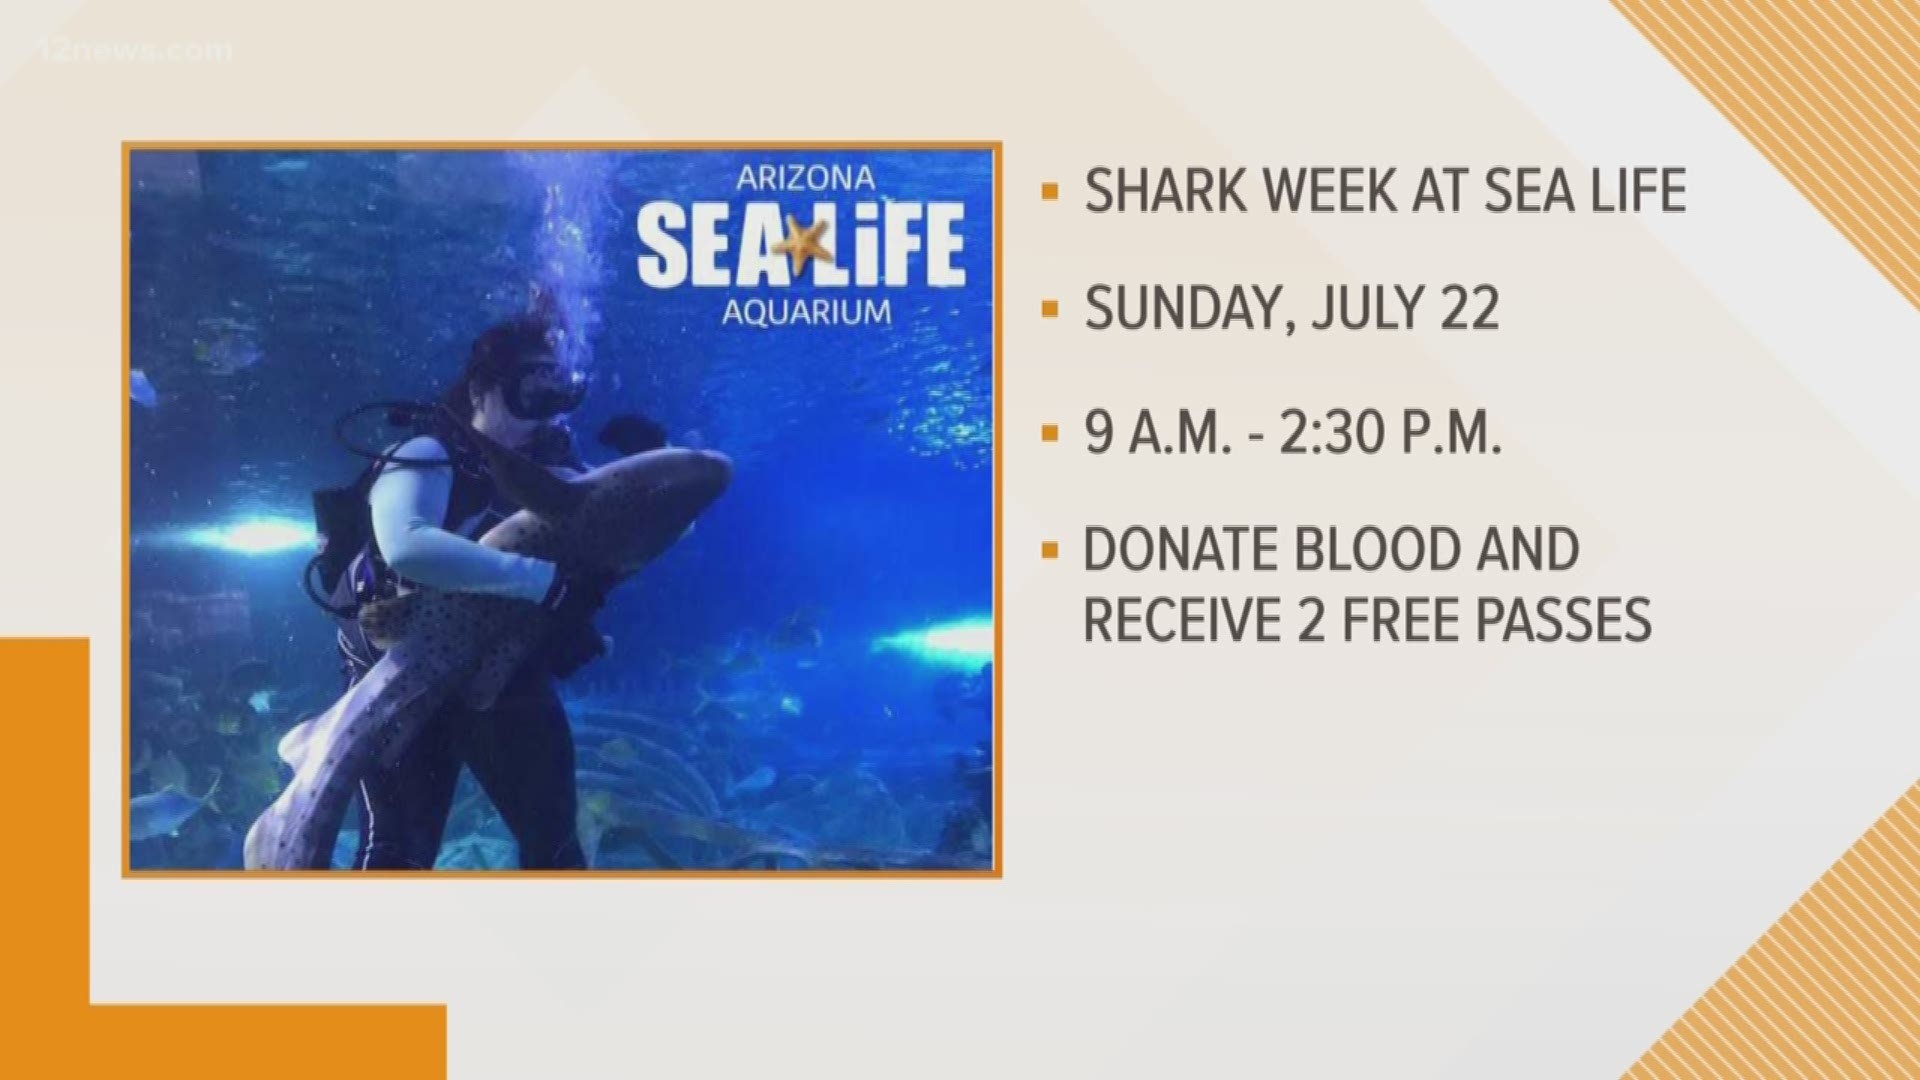 Shark Week kicks off this Sunday at the Sea Life Aquarium in Tempe for free.